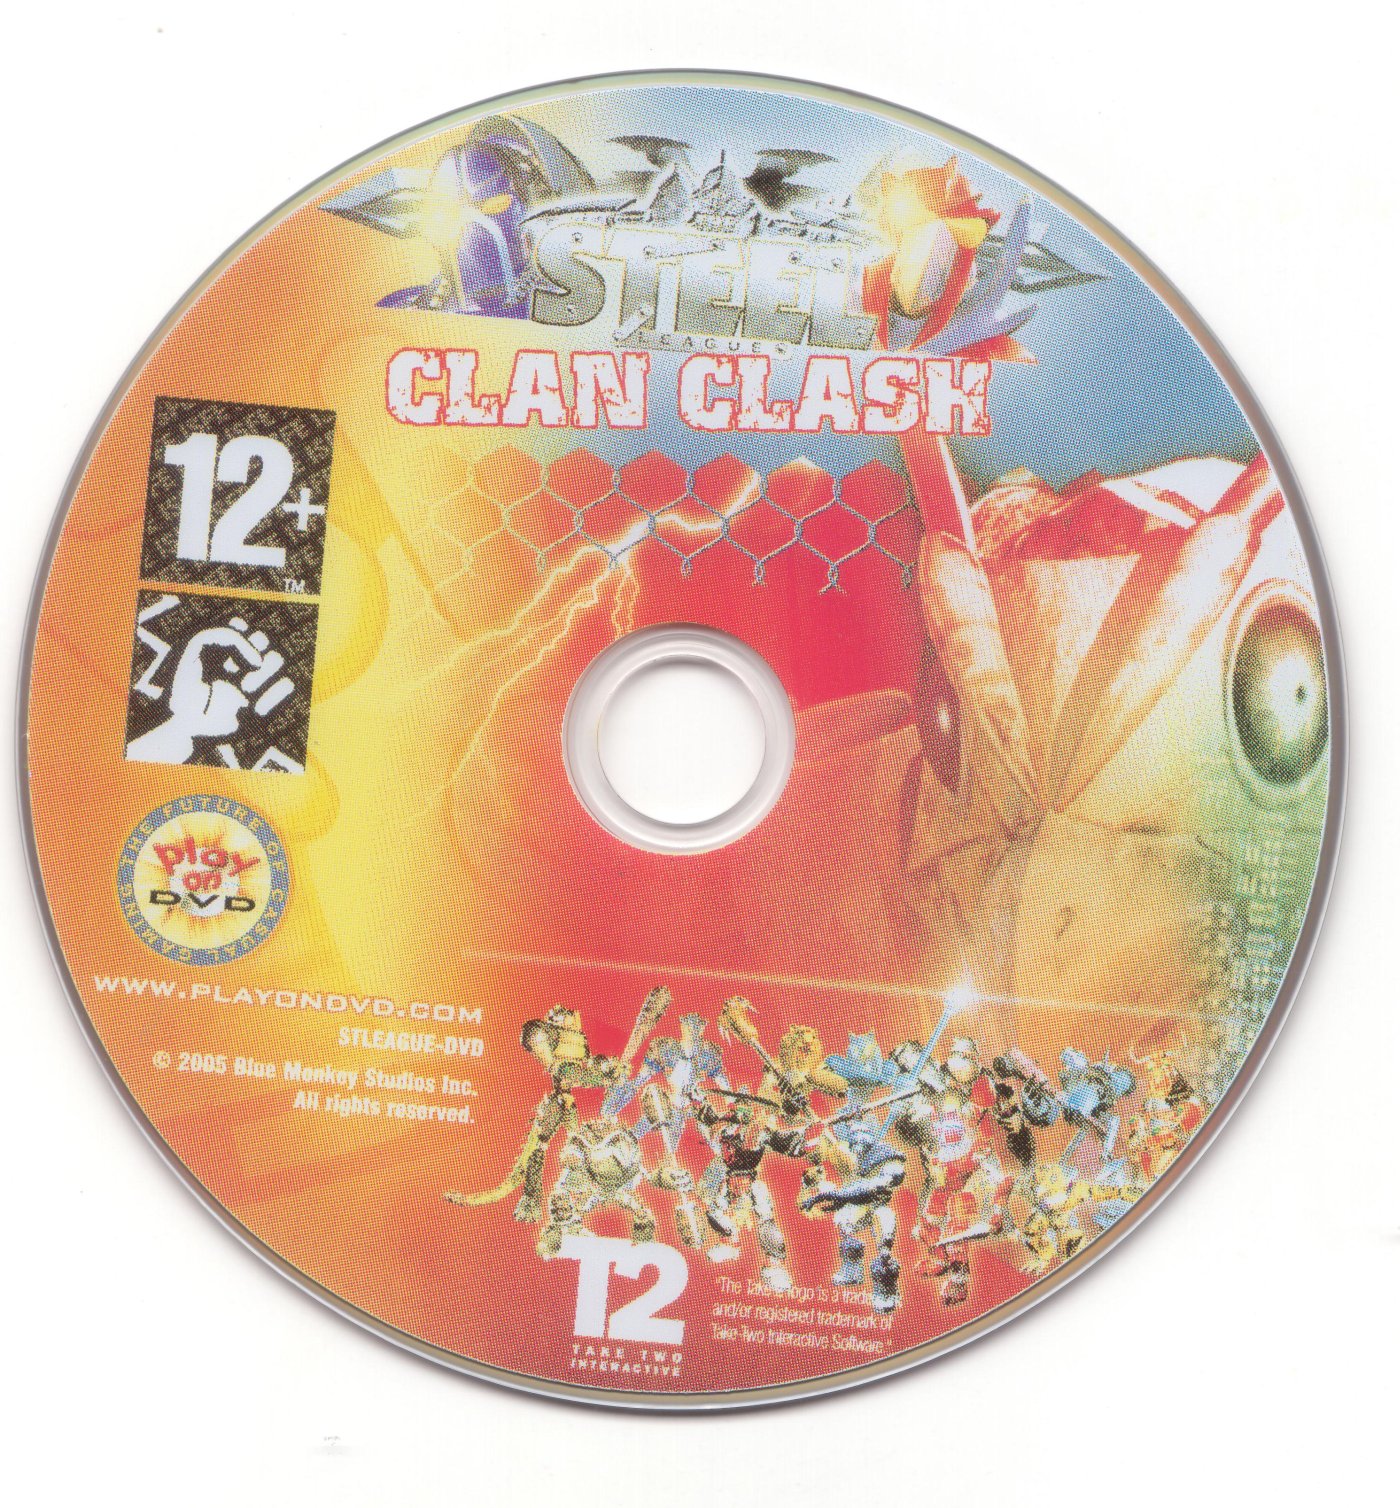 Clan clash